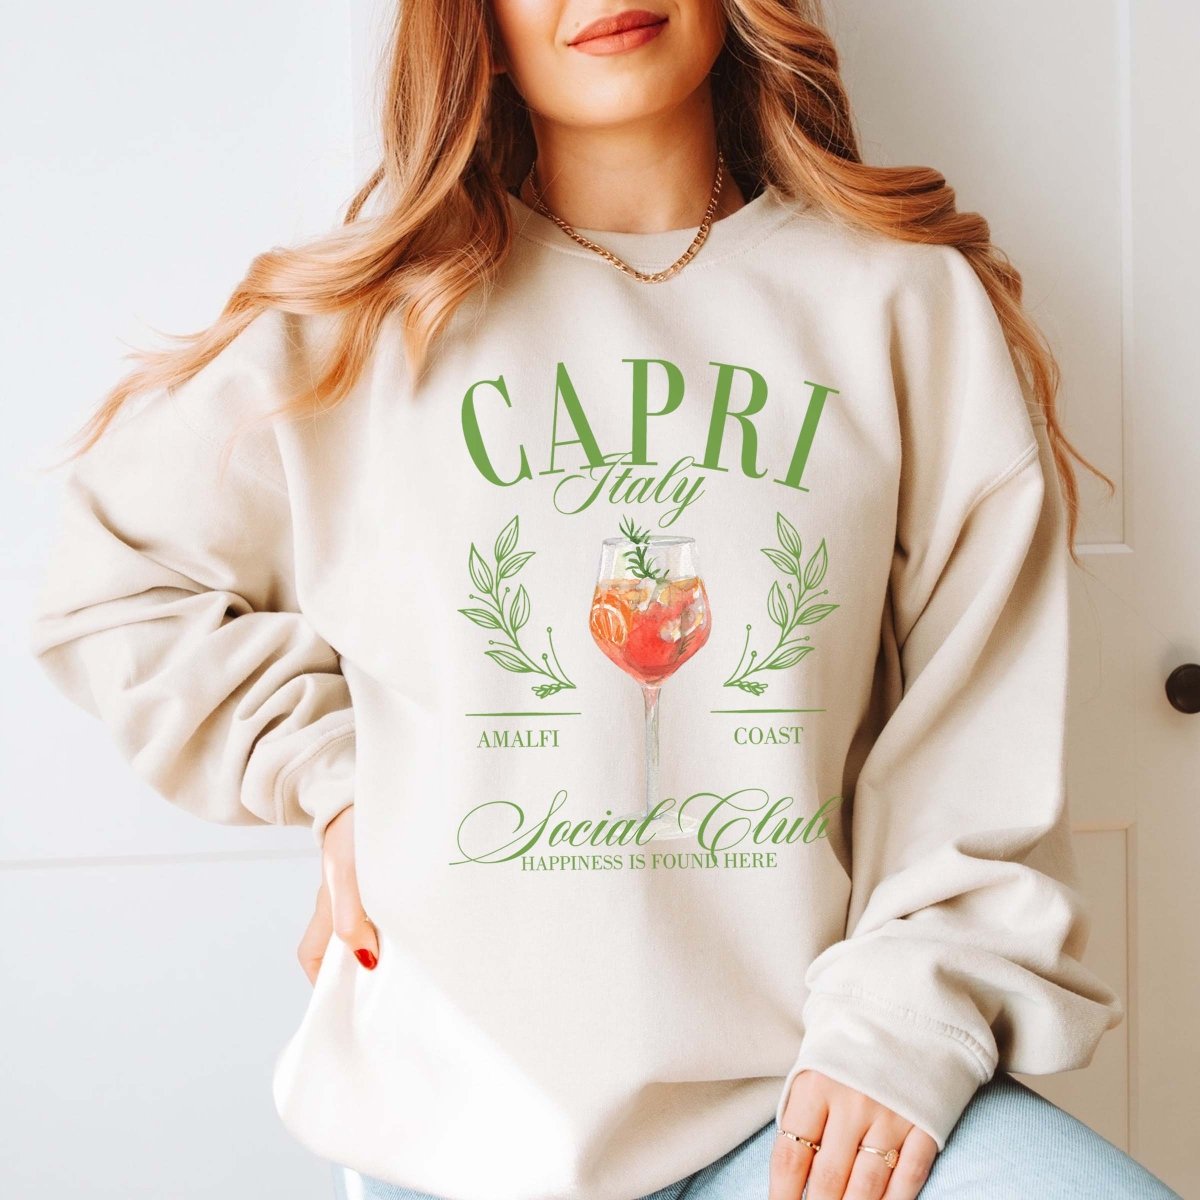 Capri Italy Social Club Wholesale Crew Sweatshirt - Limeberry Designs